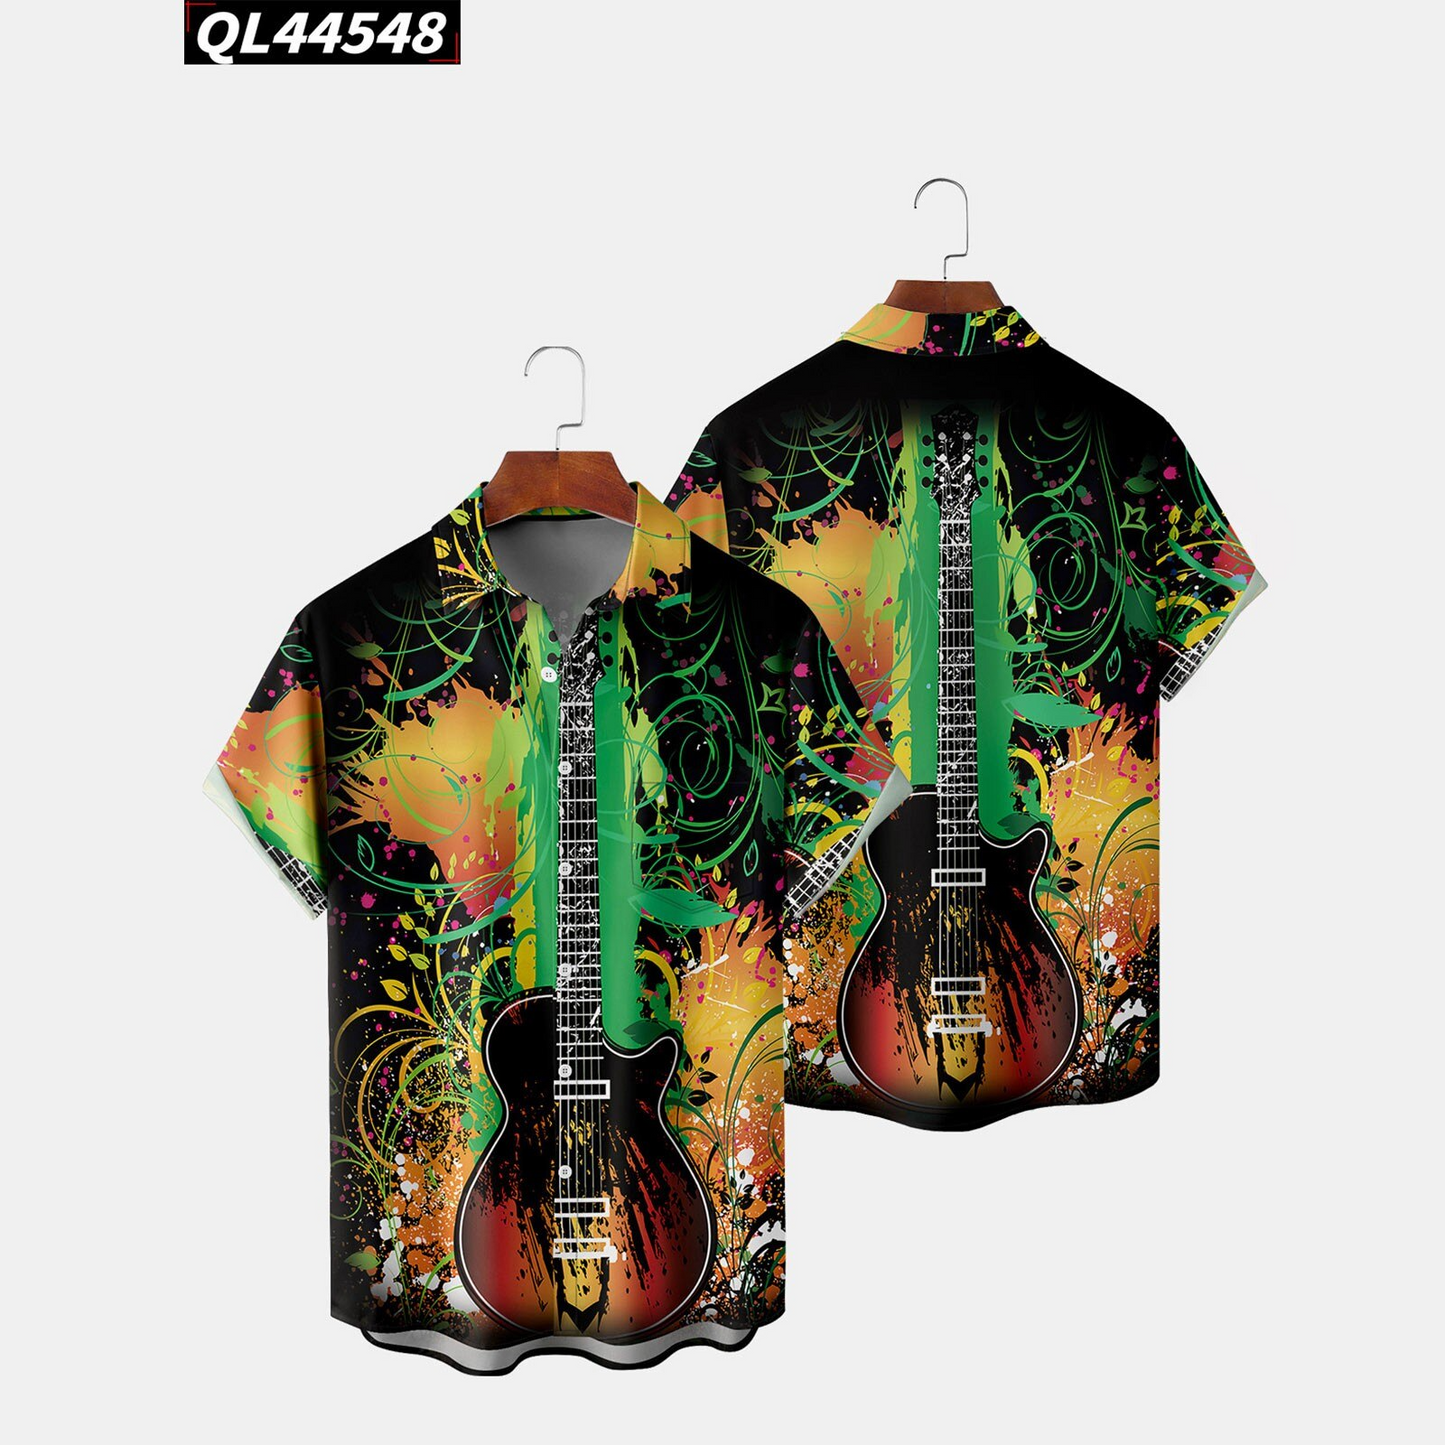 Men's Casual Guitar Graphic Print Shirts